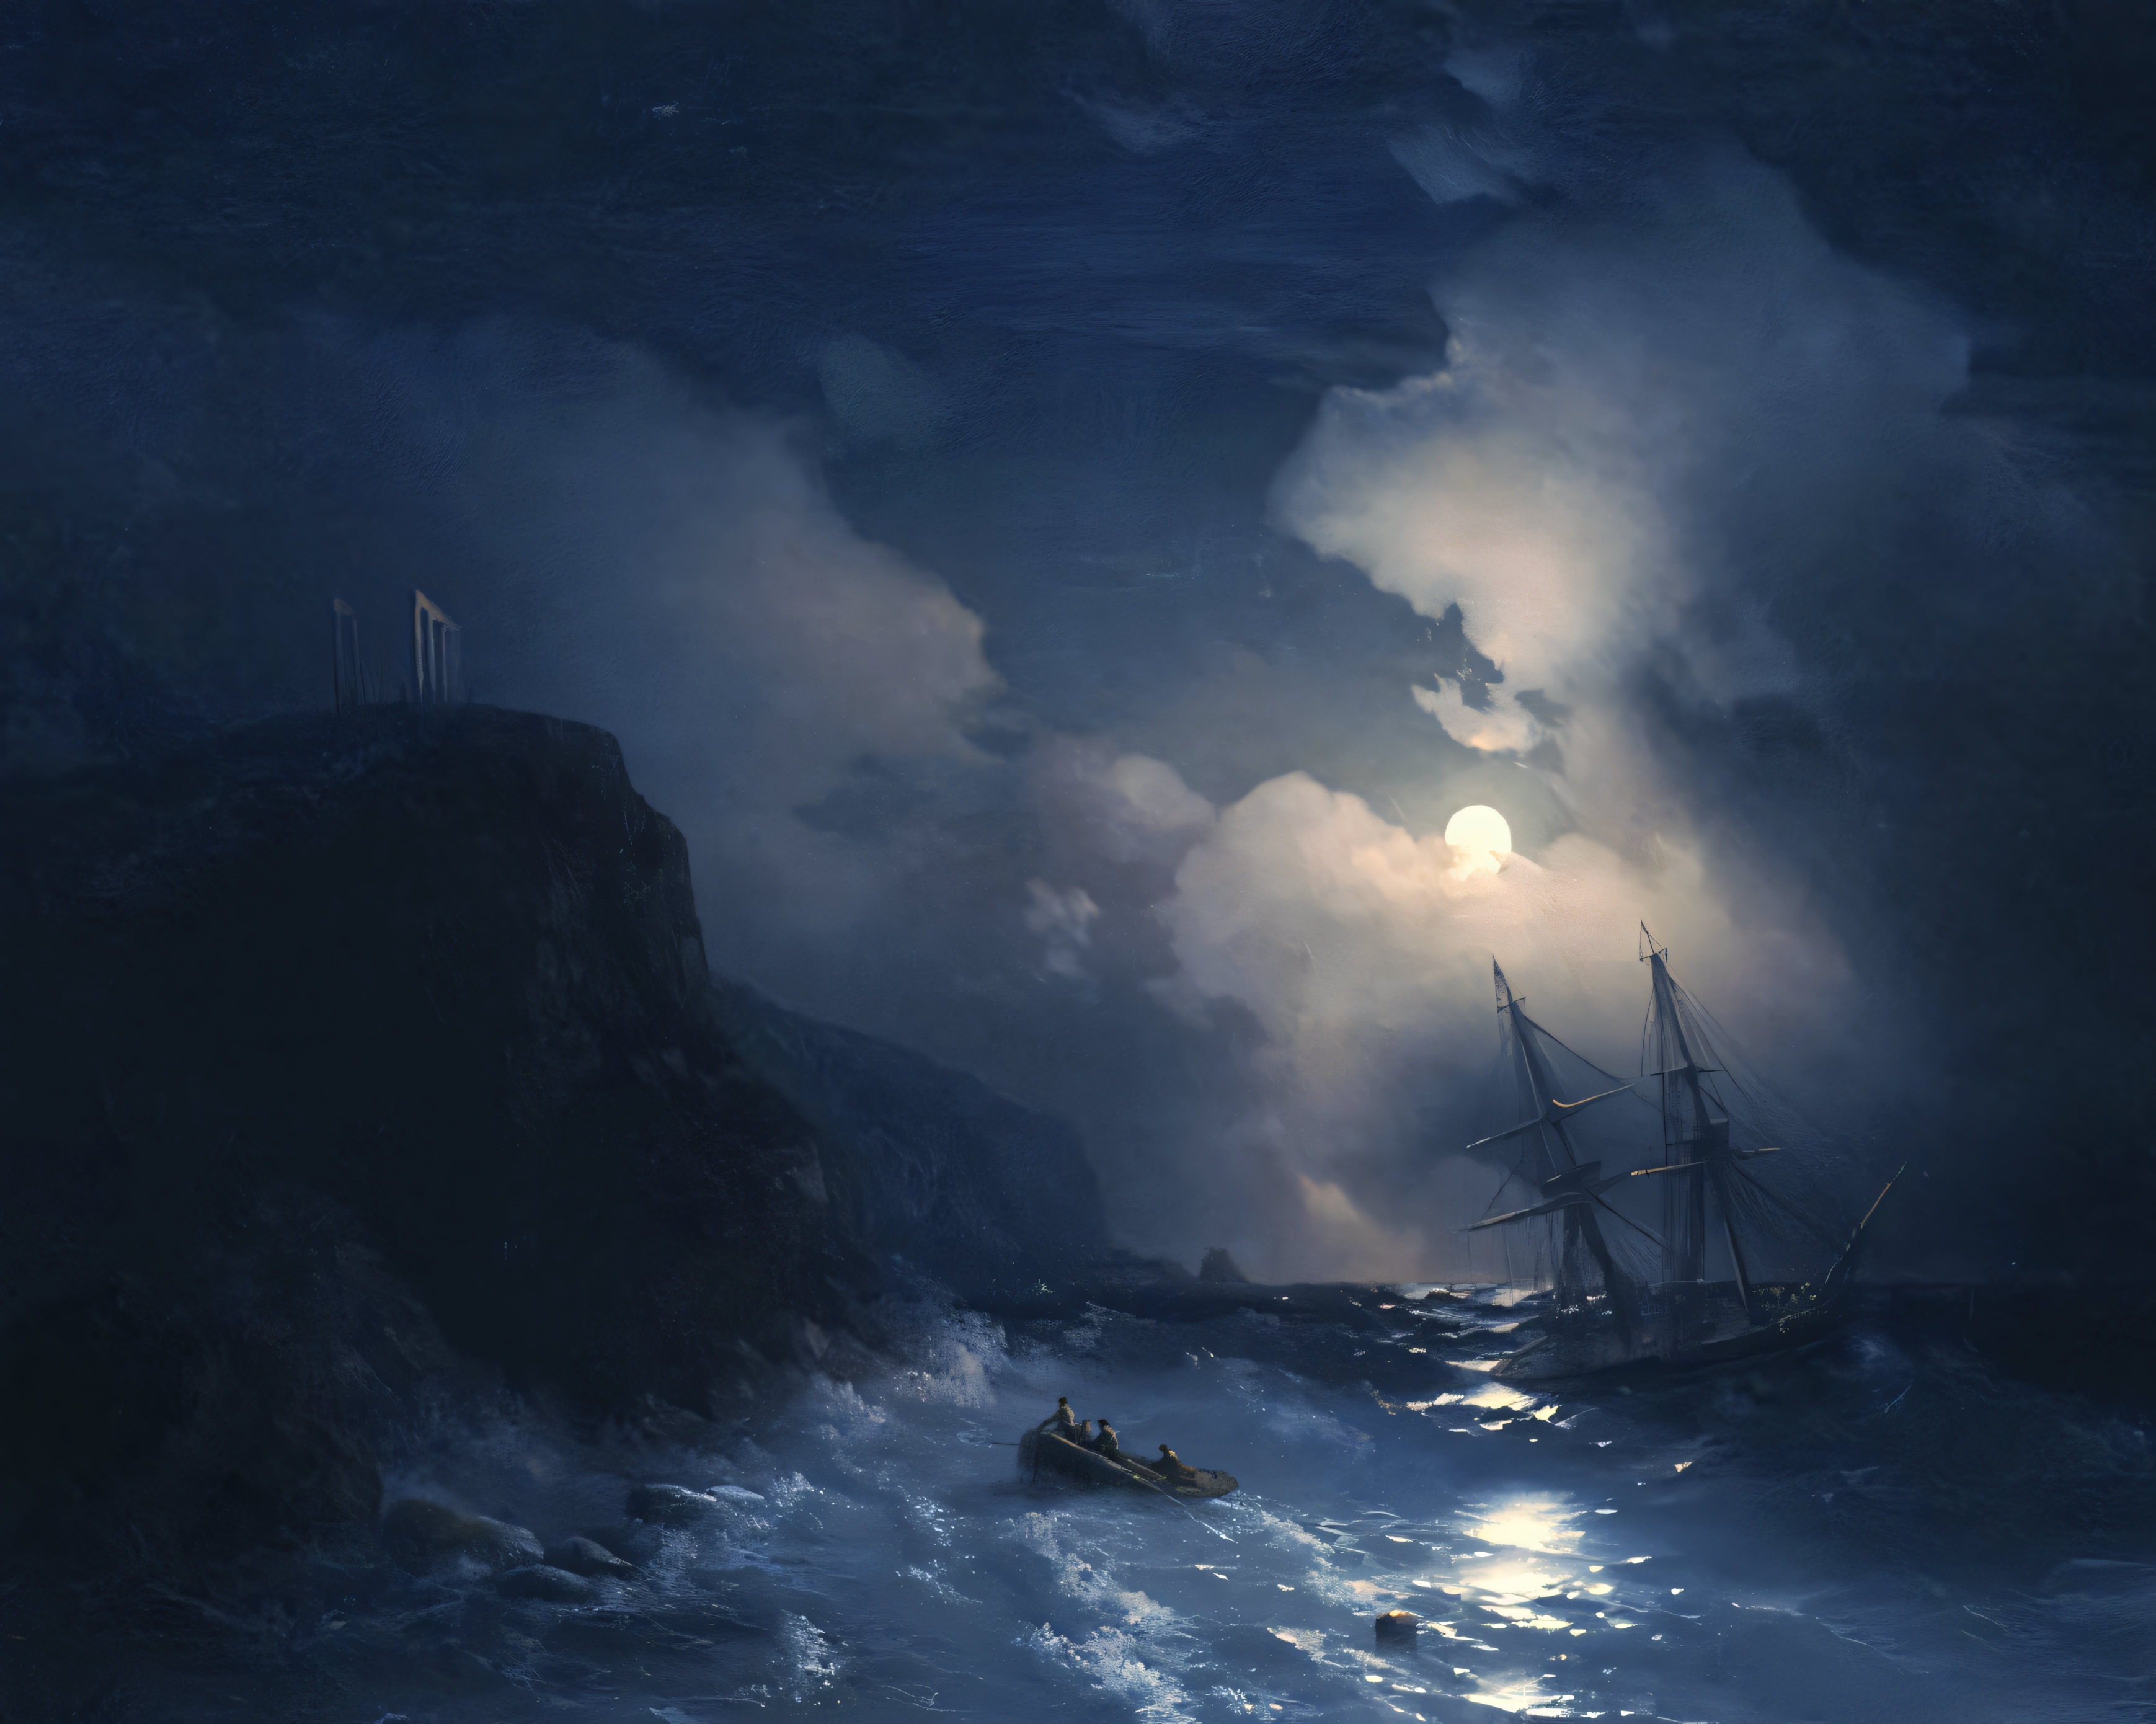 Ivan Aivazovsky Seashore Sea Ruins Cliff Oil On Canvas Oil Painting Rowboat Boat Moonlight Dusk Nigh 3477x2780